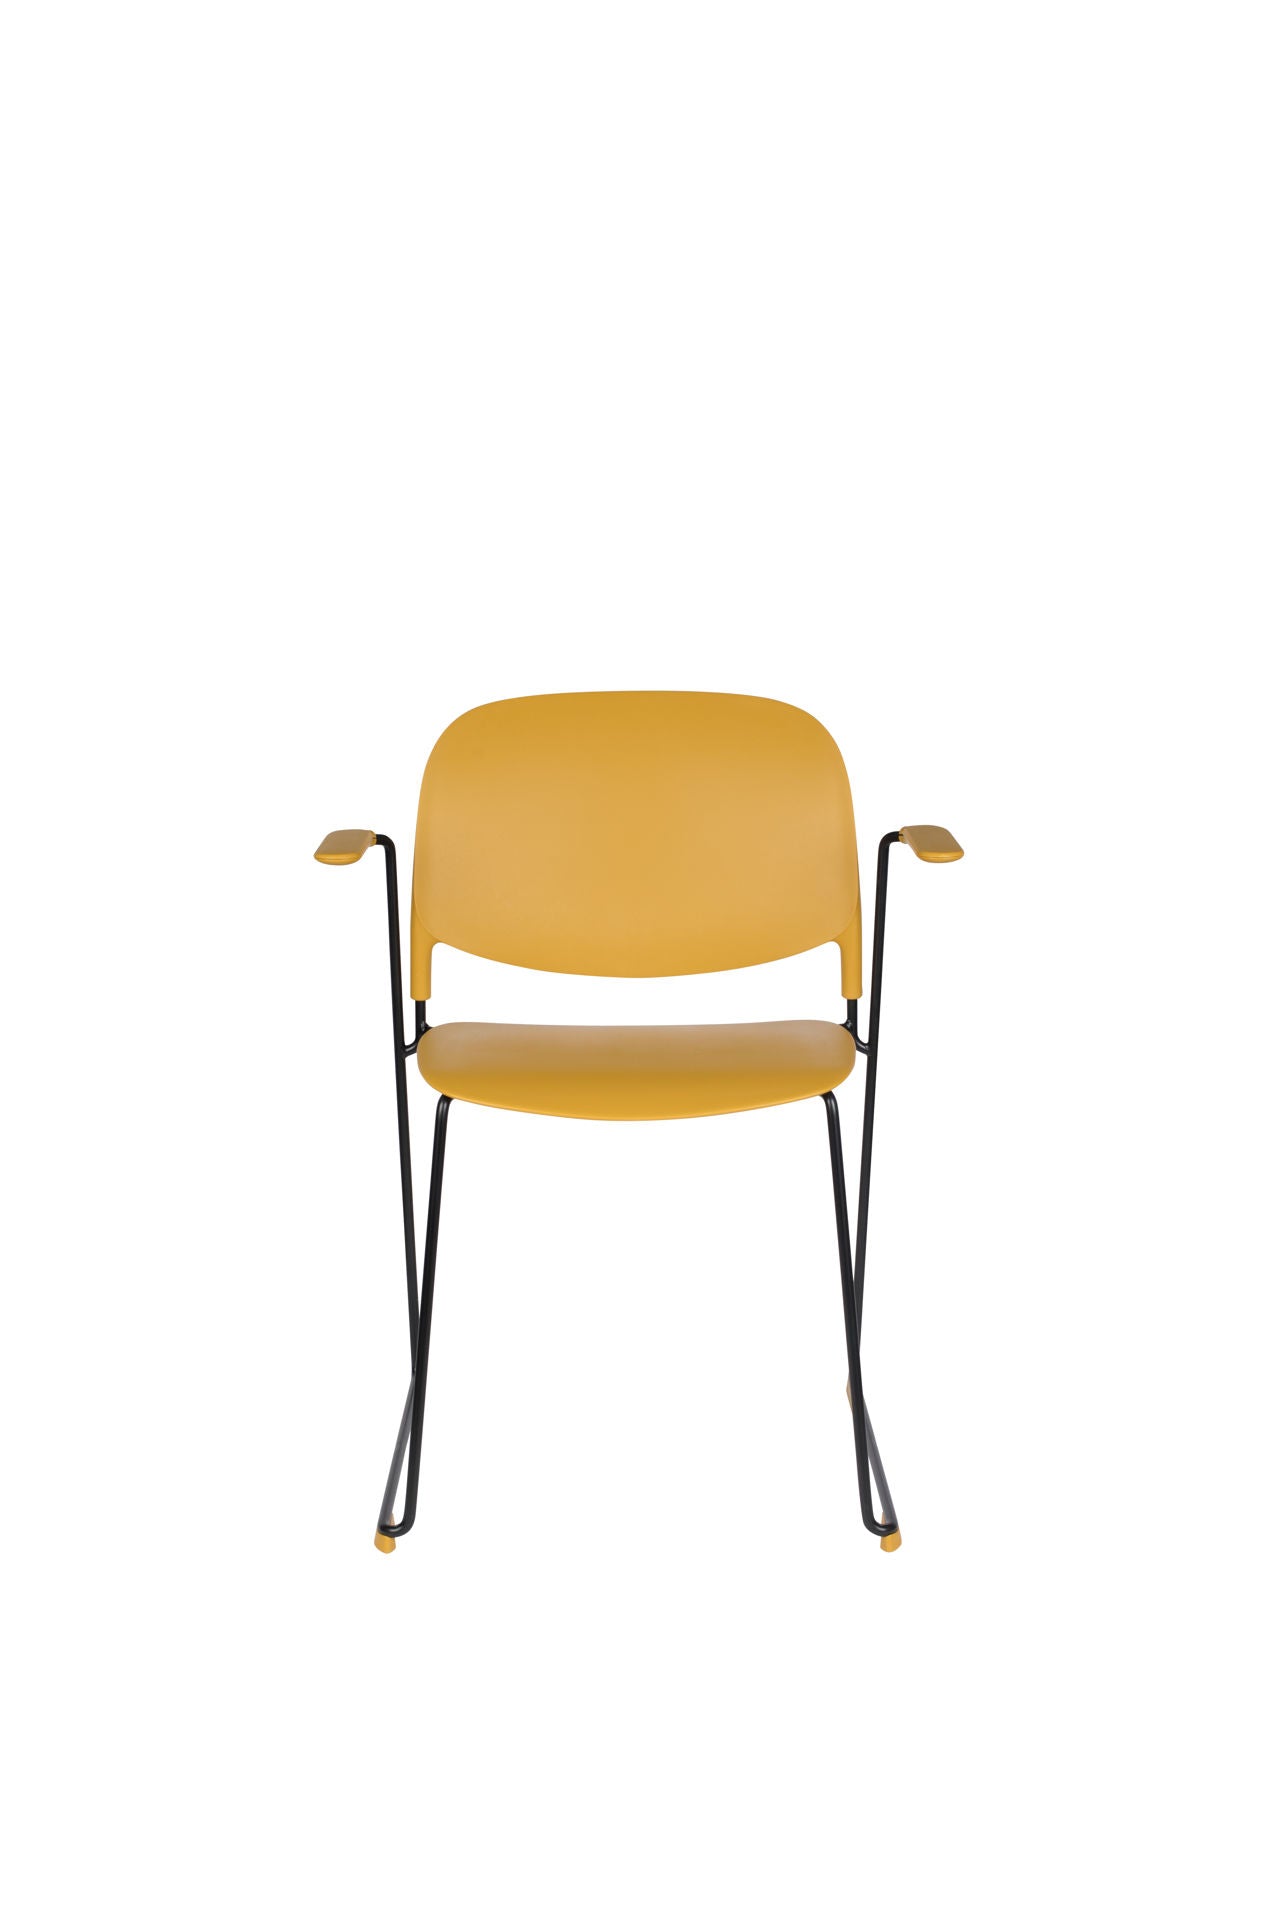 Nancy's Rolesville Chair - Retro - Ochre, Black - Polypropylene, Steel, Plastic - 53 cm x 63.5 cm x 80.5 cm